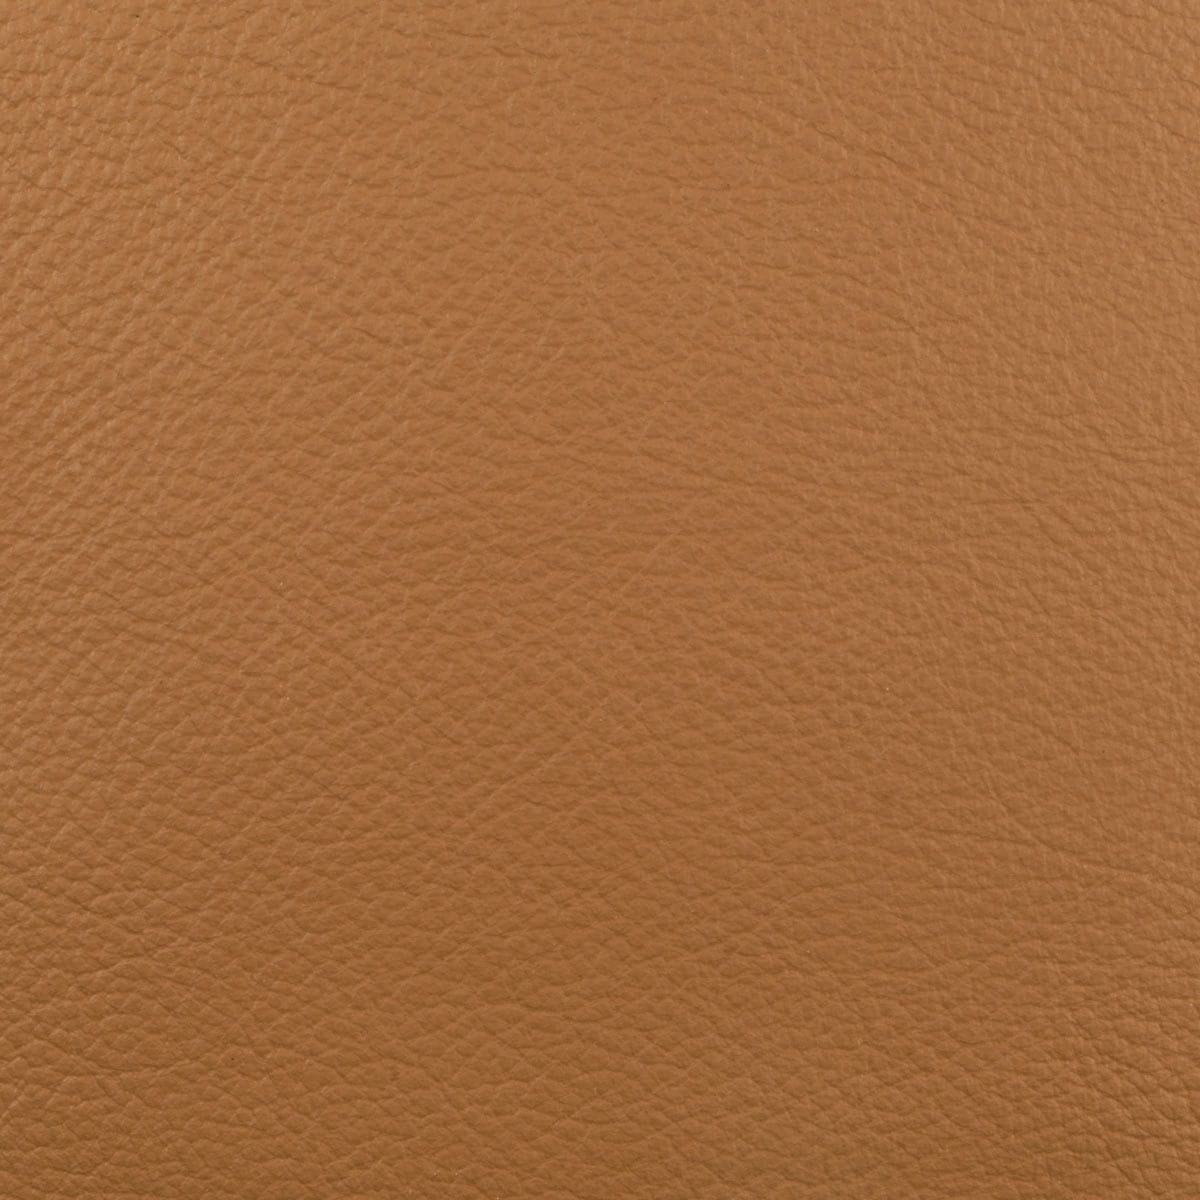 Barcelona Top Grain Protected Leather - Jamie Stern Design